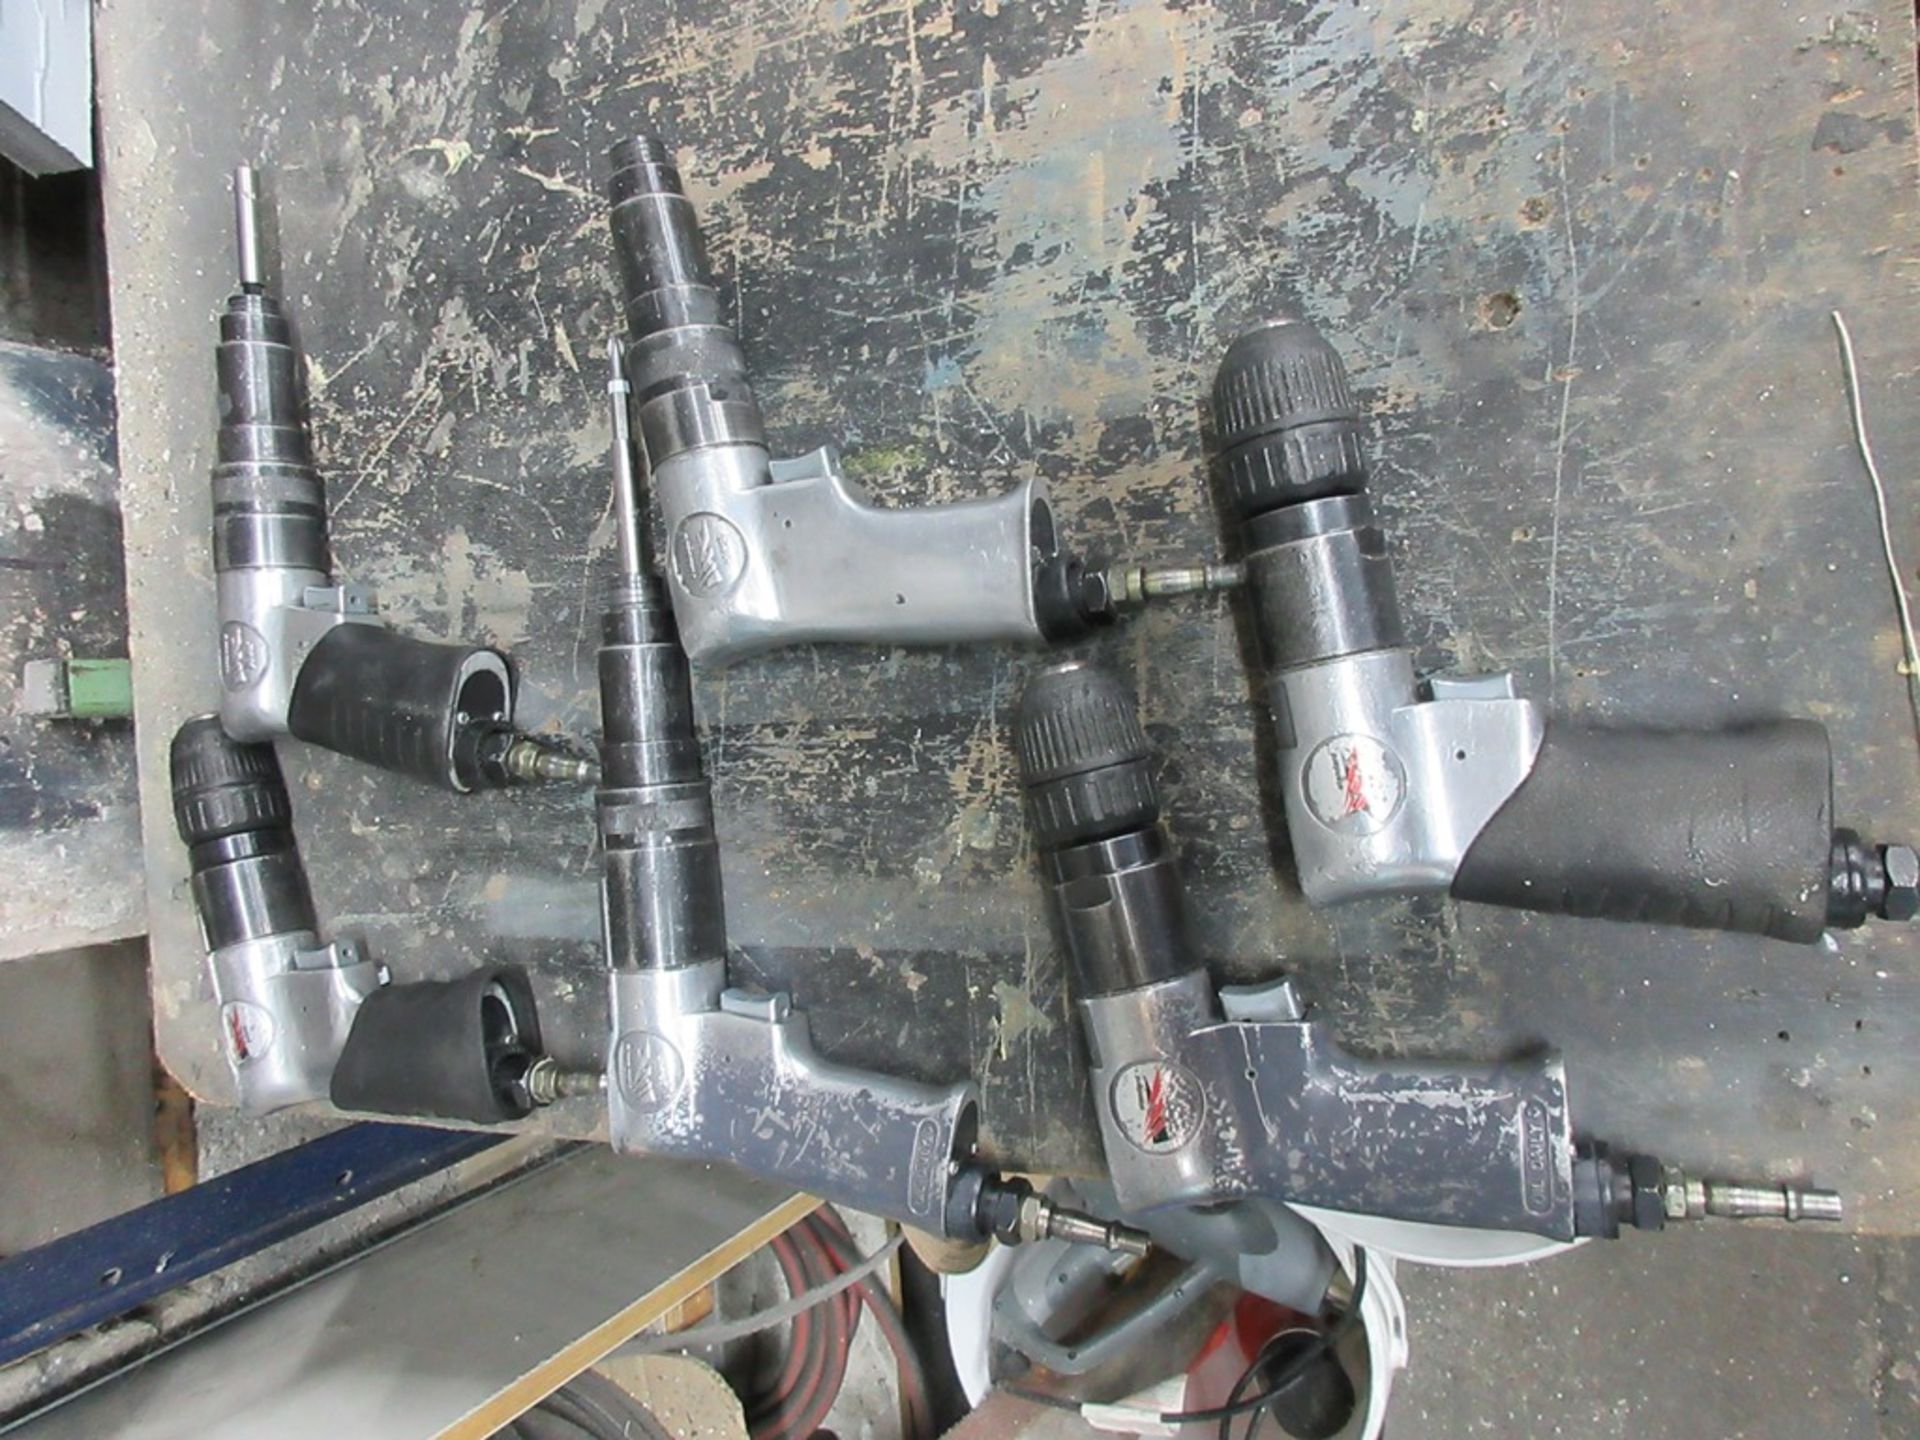 Six assorted pneumatic hand tools